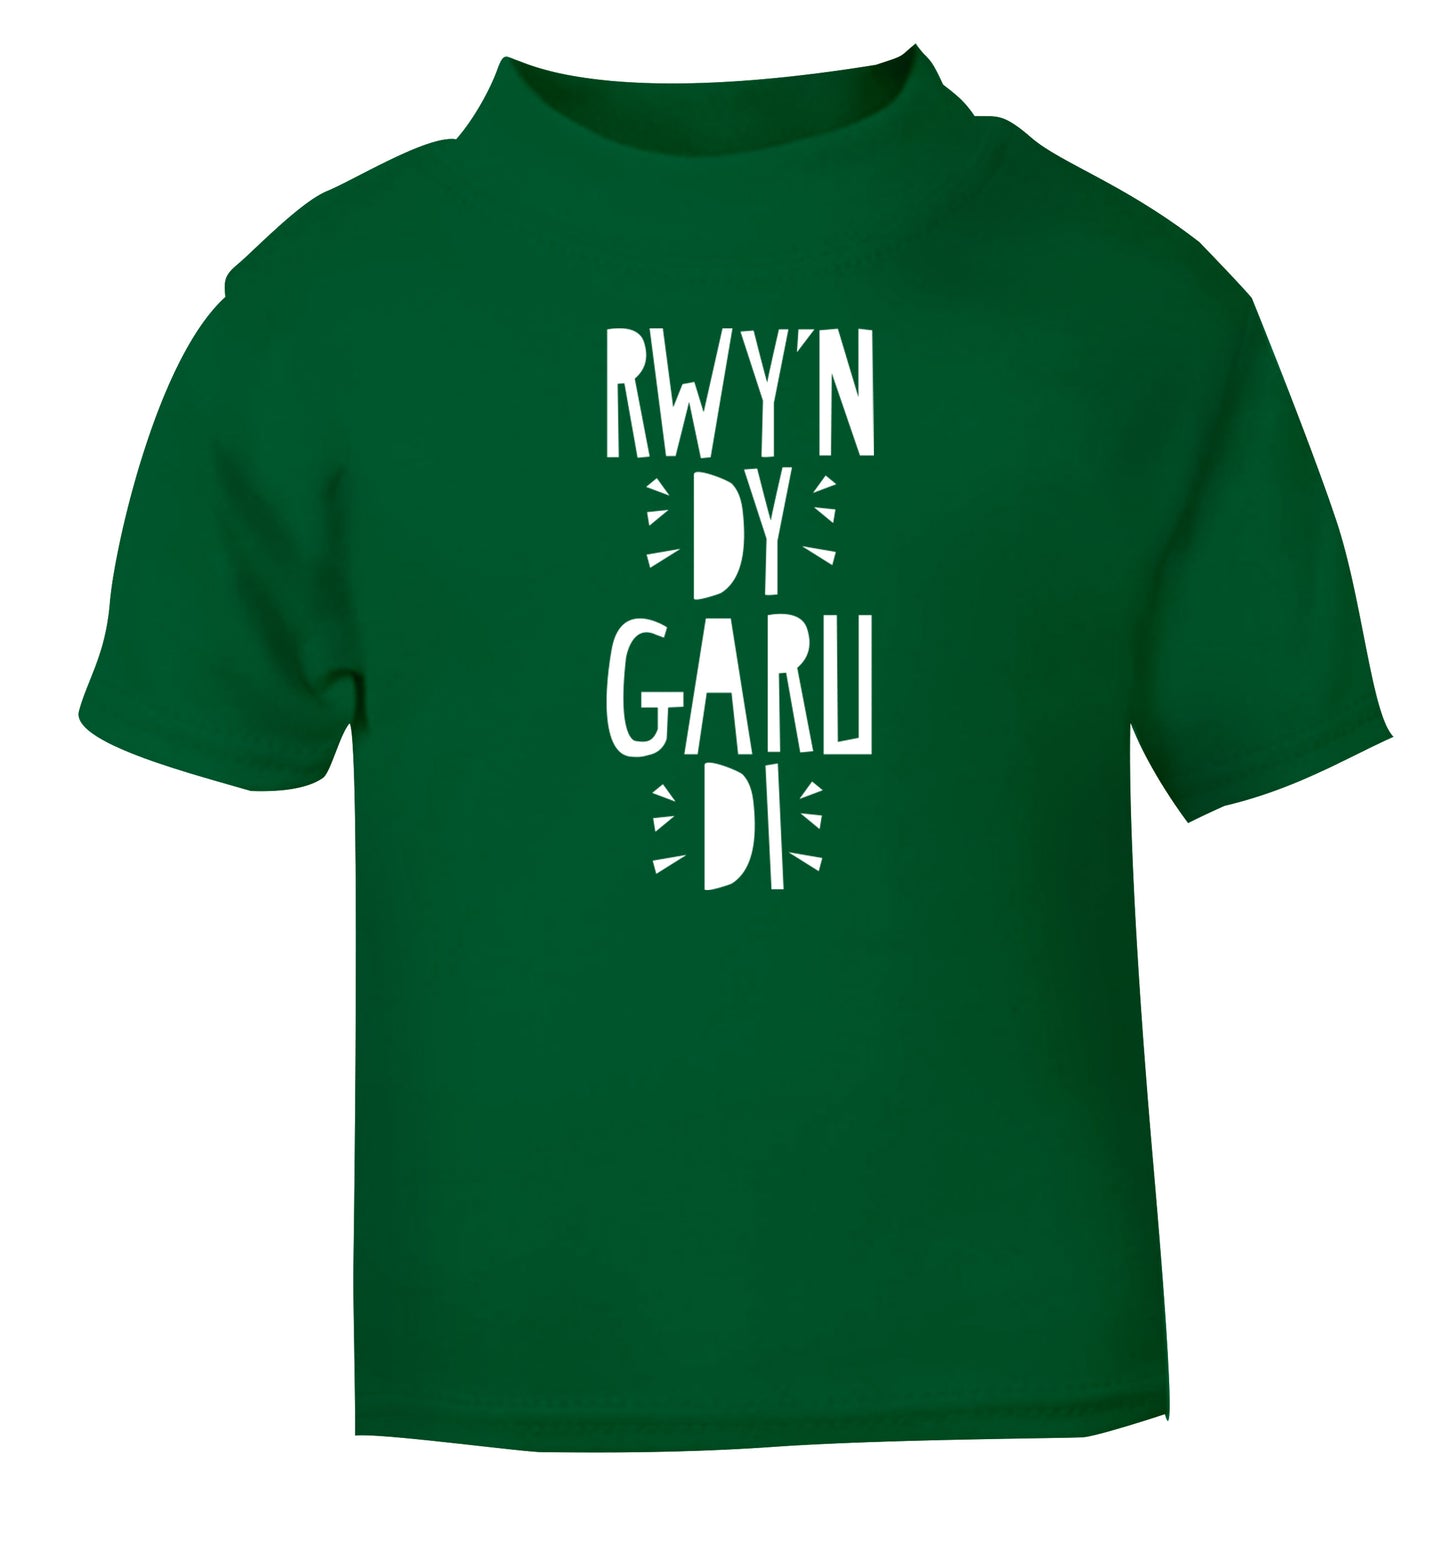 Rwy'n dy garu di - I love you green Baby Toddler Tshirt 2 Years